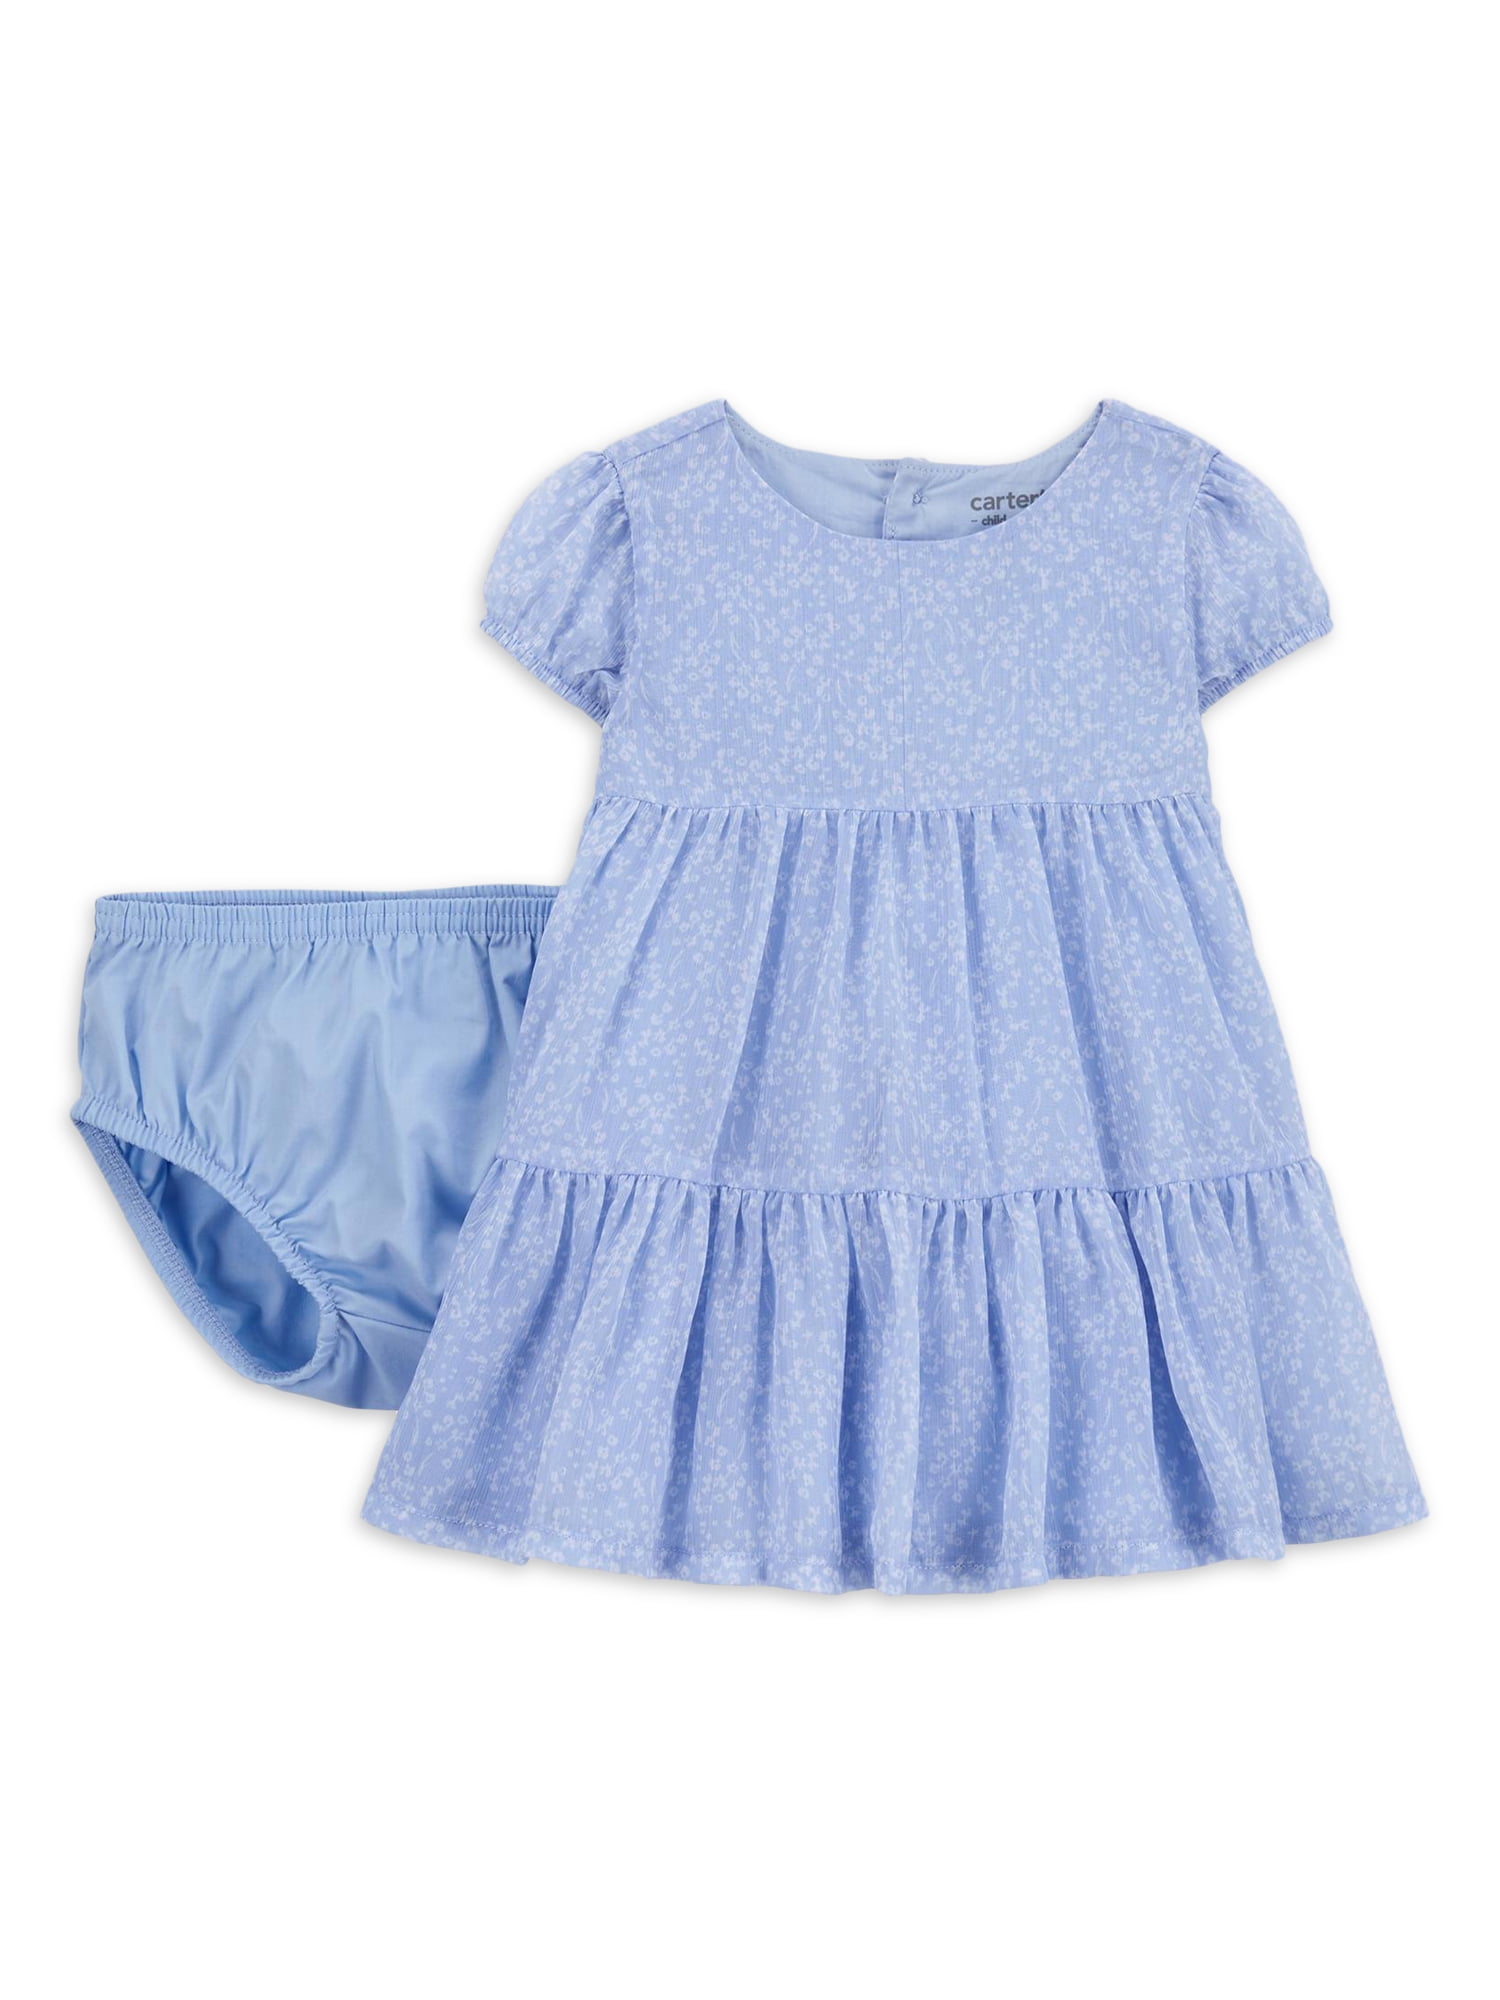 Carter s Child of Mine Baby Girl Dress 2 Piece Sizes 0 3 24 Months 6cde9513 835d 46d6 a3de d0be81434c71.5eadd5d997756c334e911601f03b1aa5